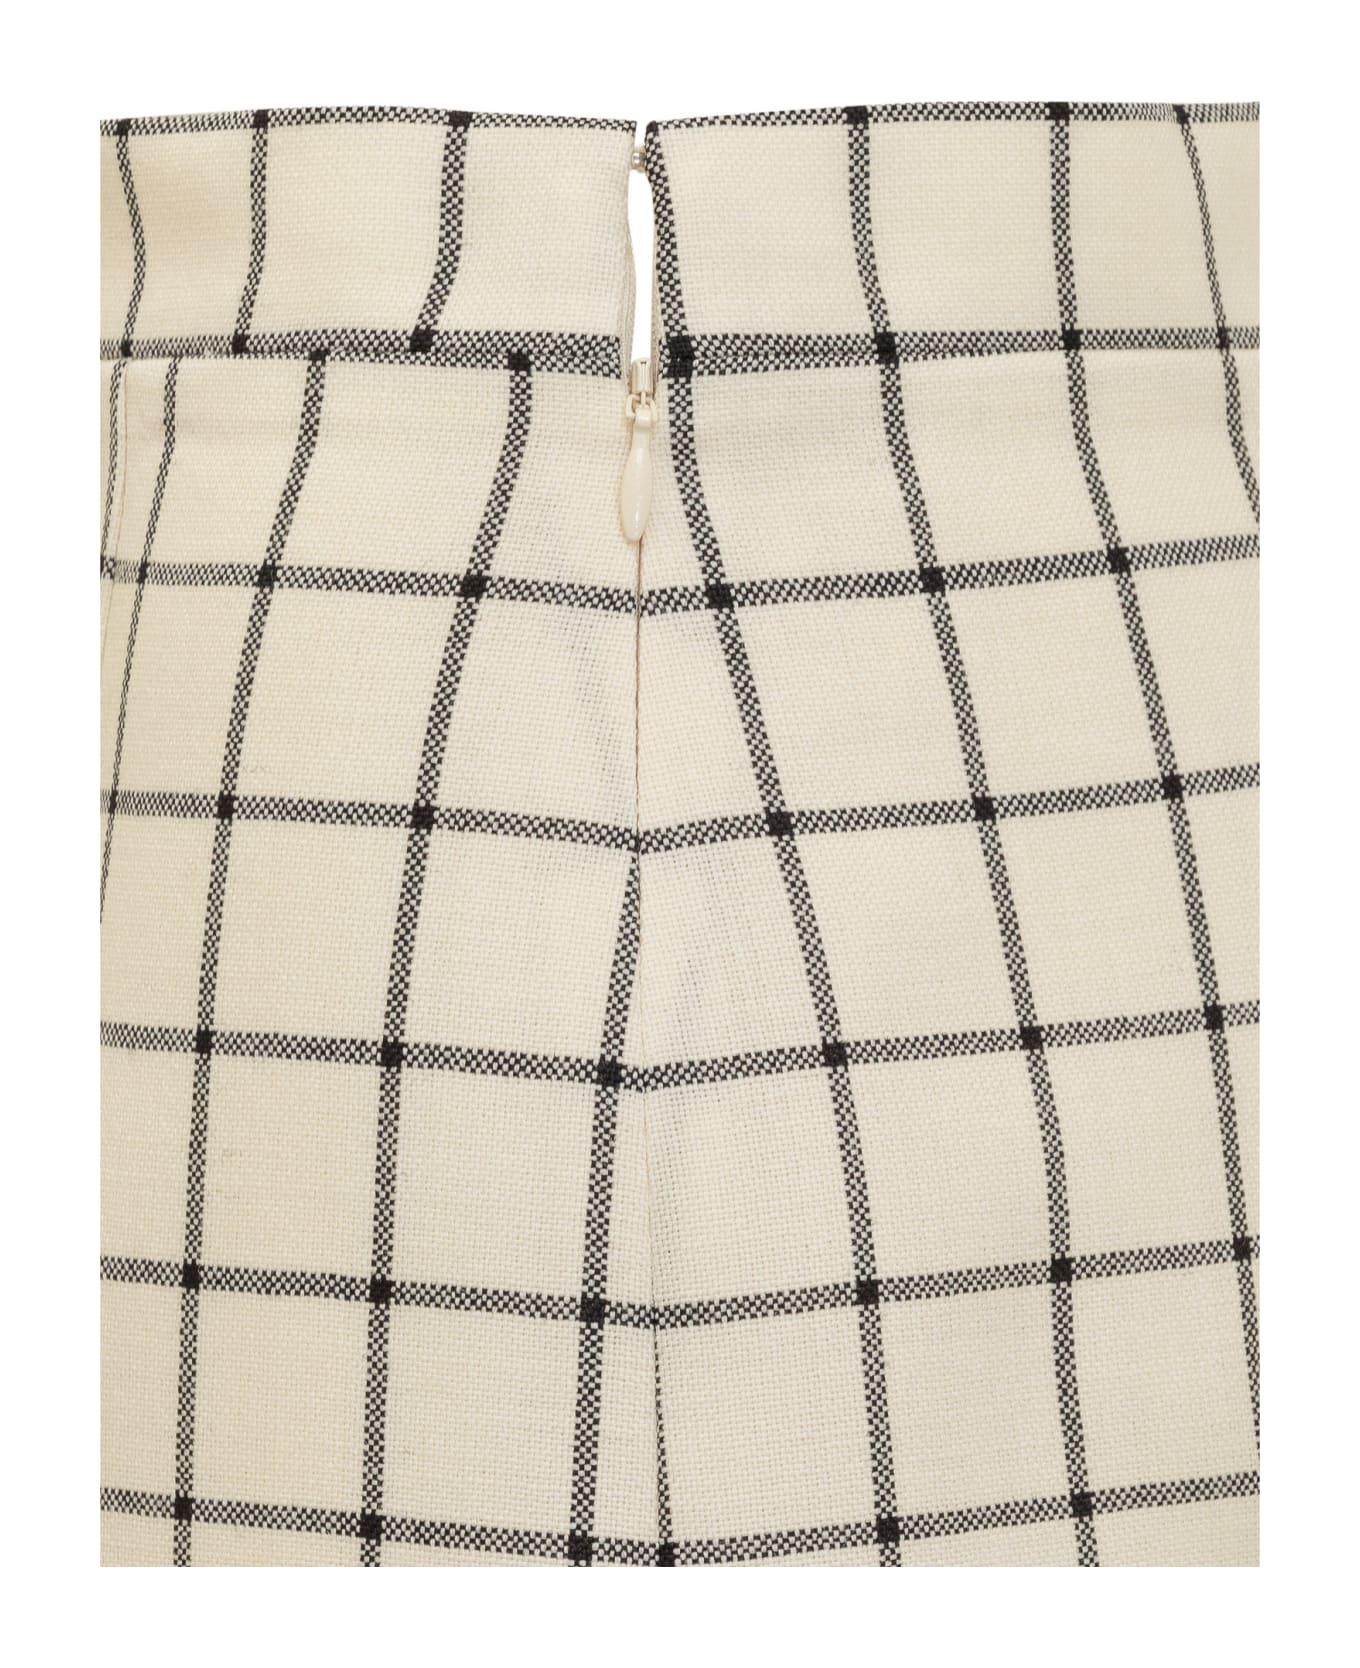 Marni Mini Skirt - BIANCO スカート